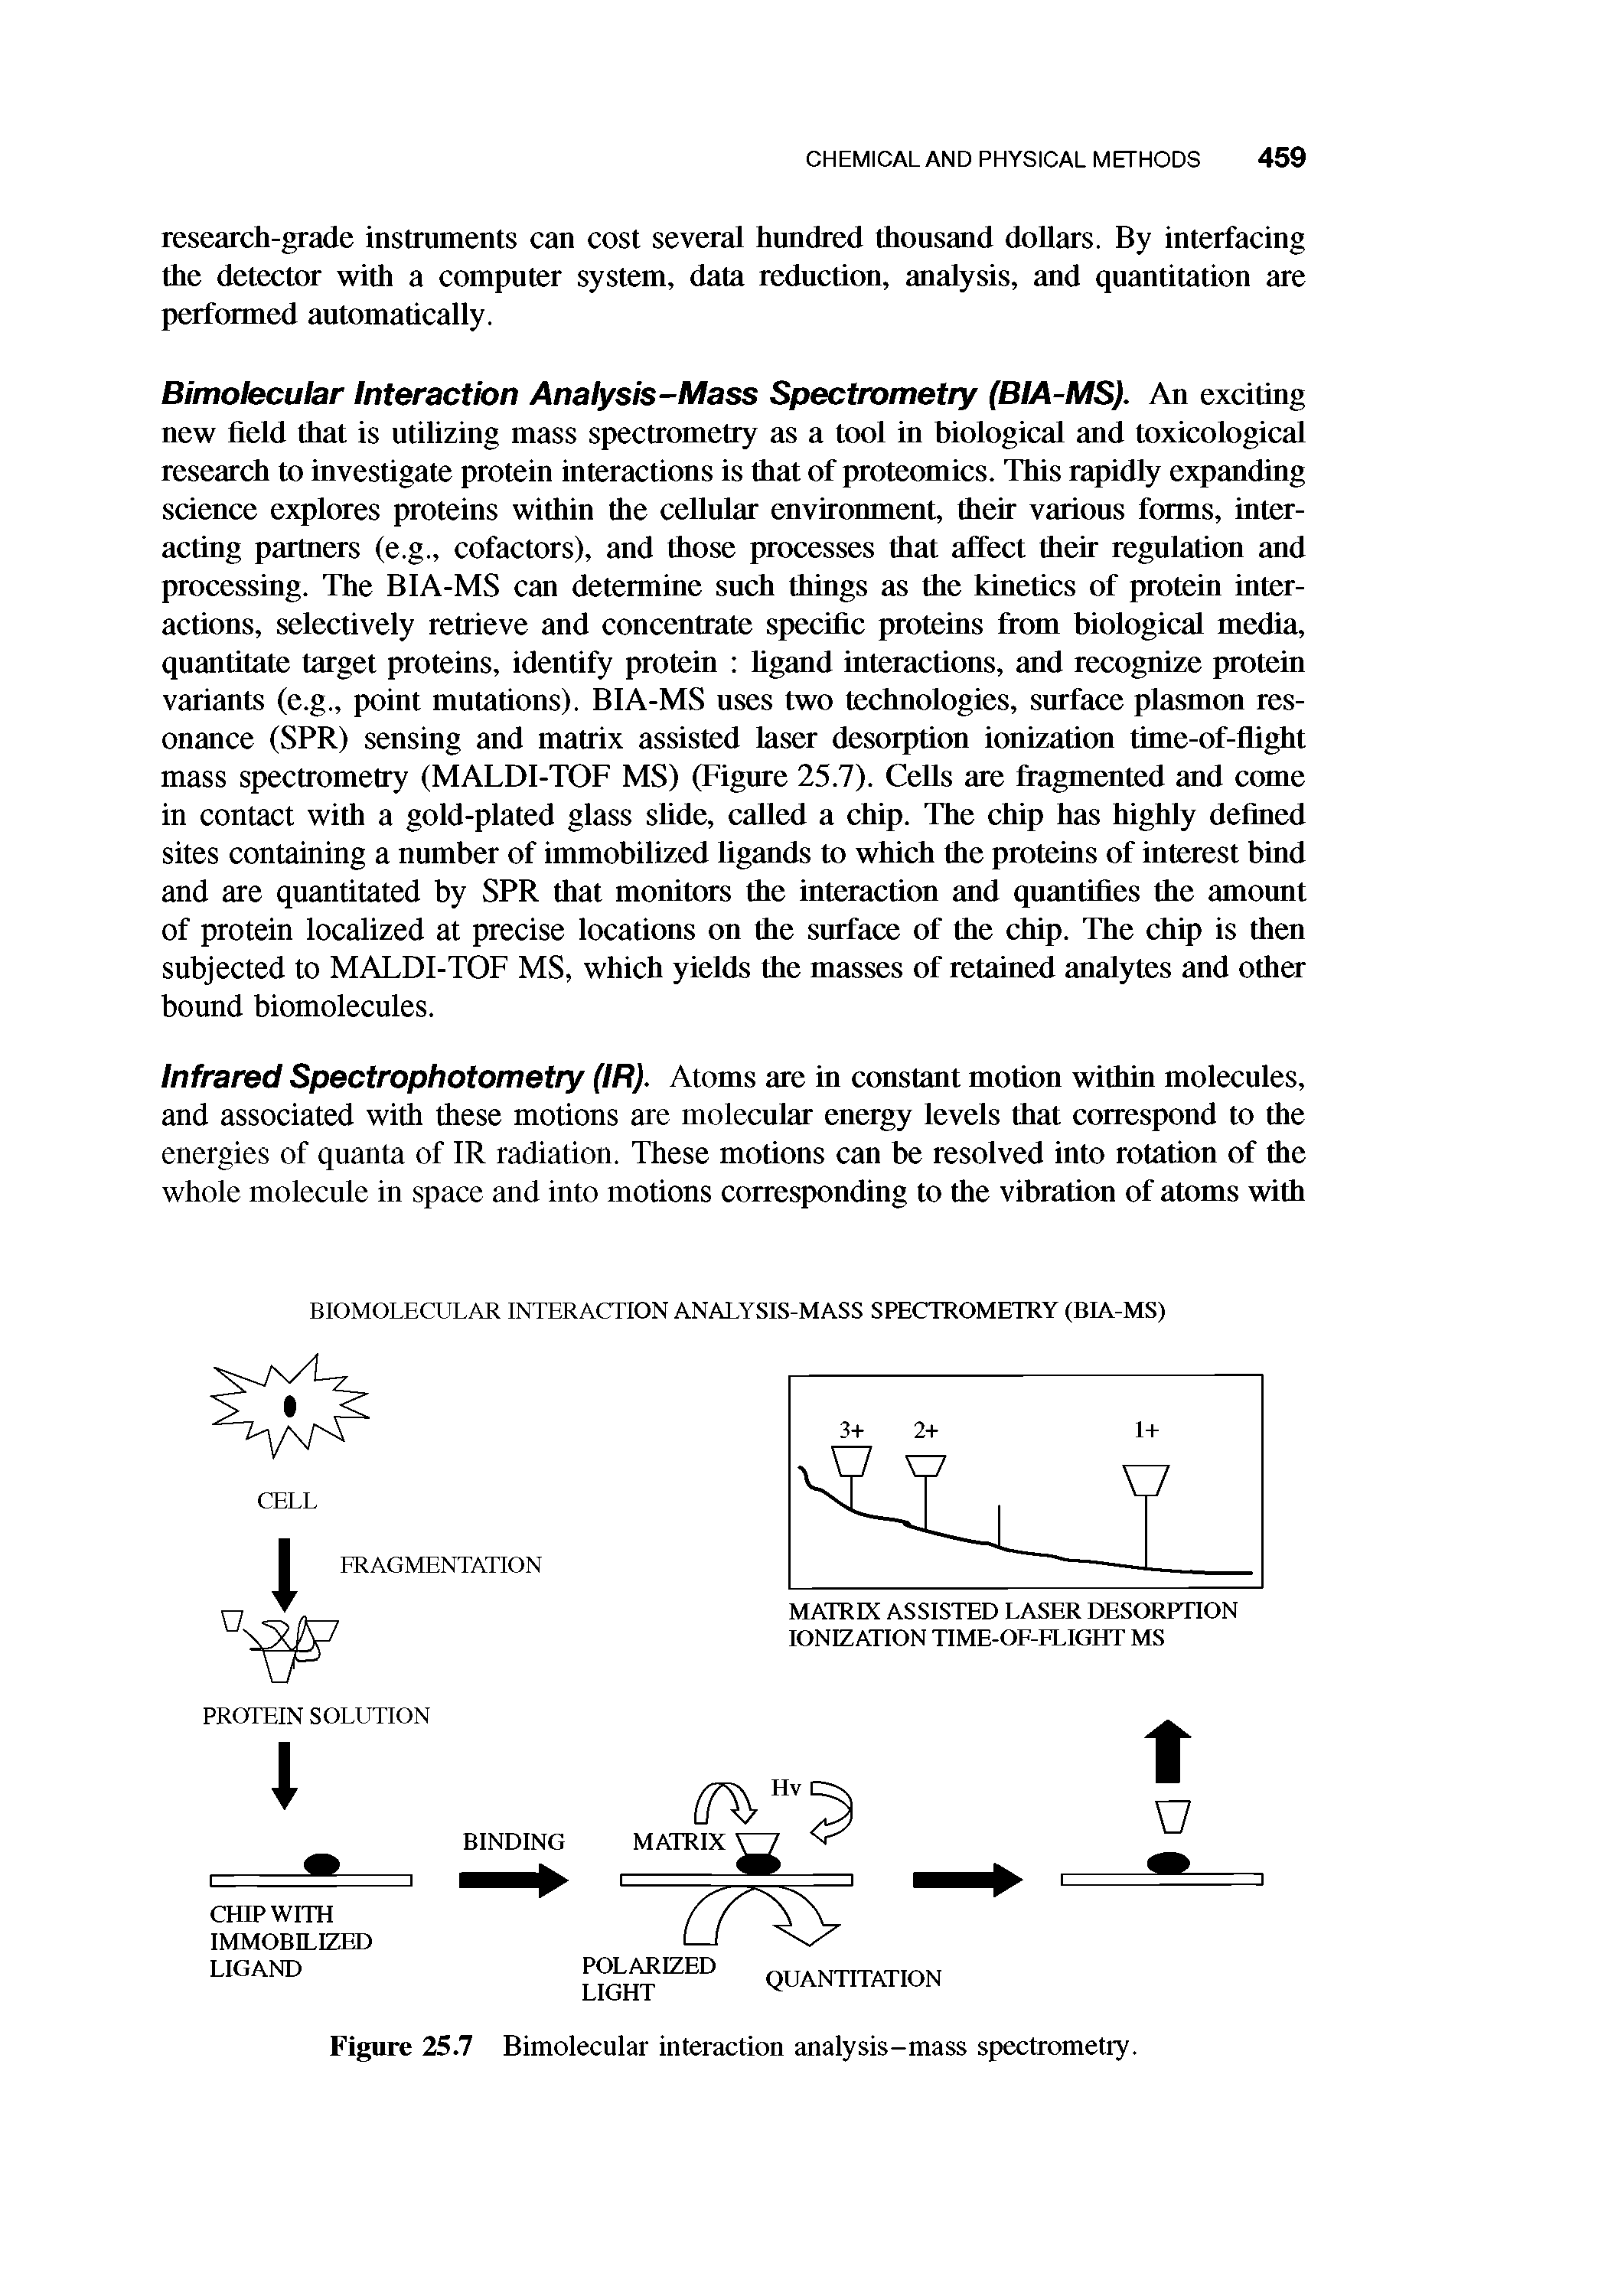 Figure 25.7 Bimolecular interaction analysis-mass spectrometry.